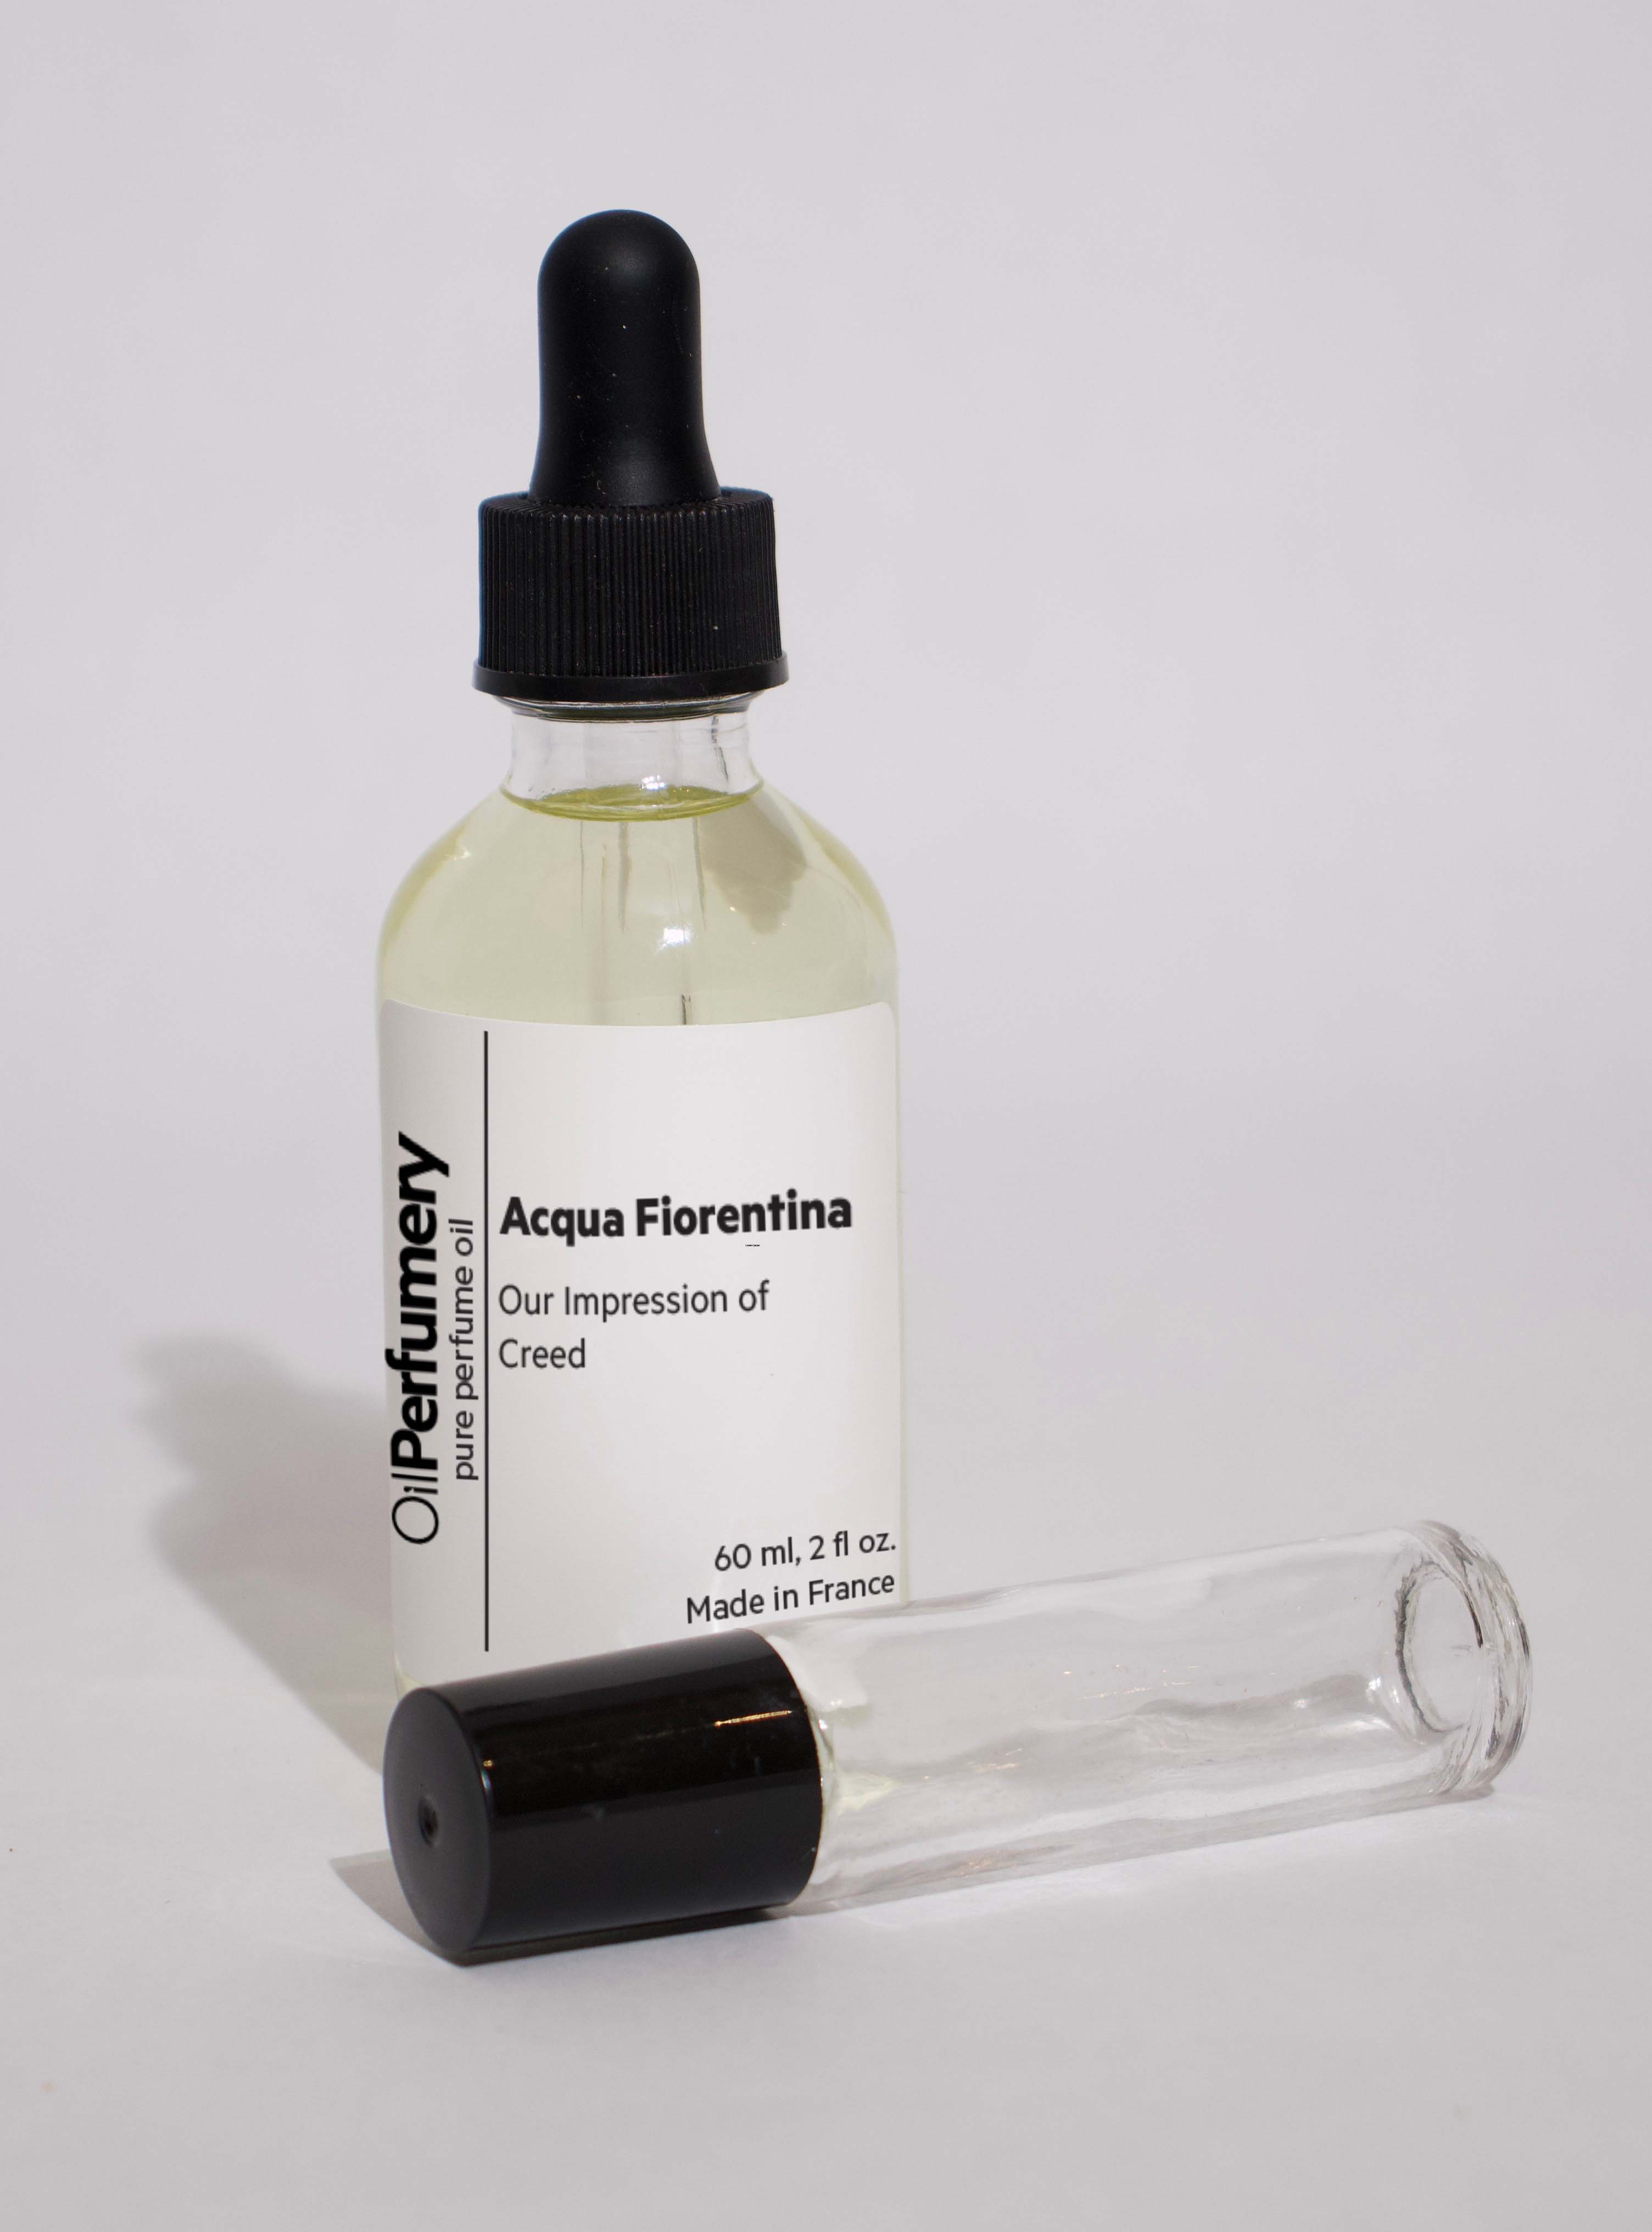 Oil Perfumery Impression of Creed - Acqua Fiorentina